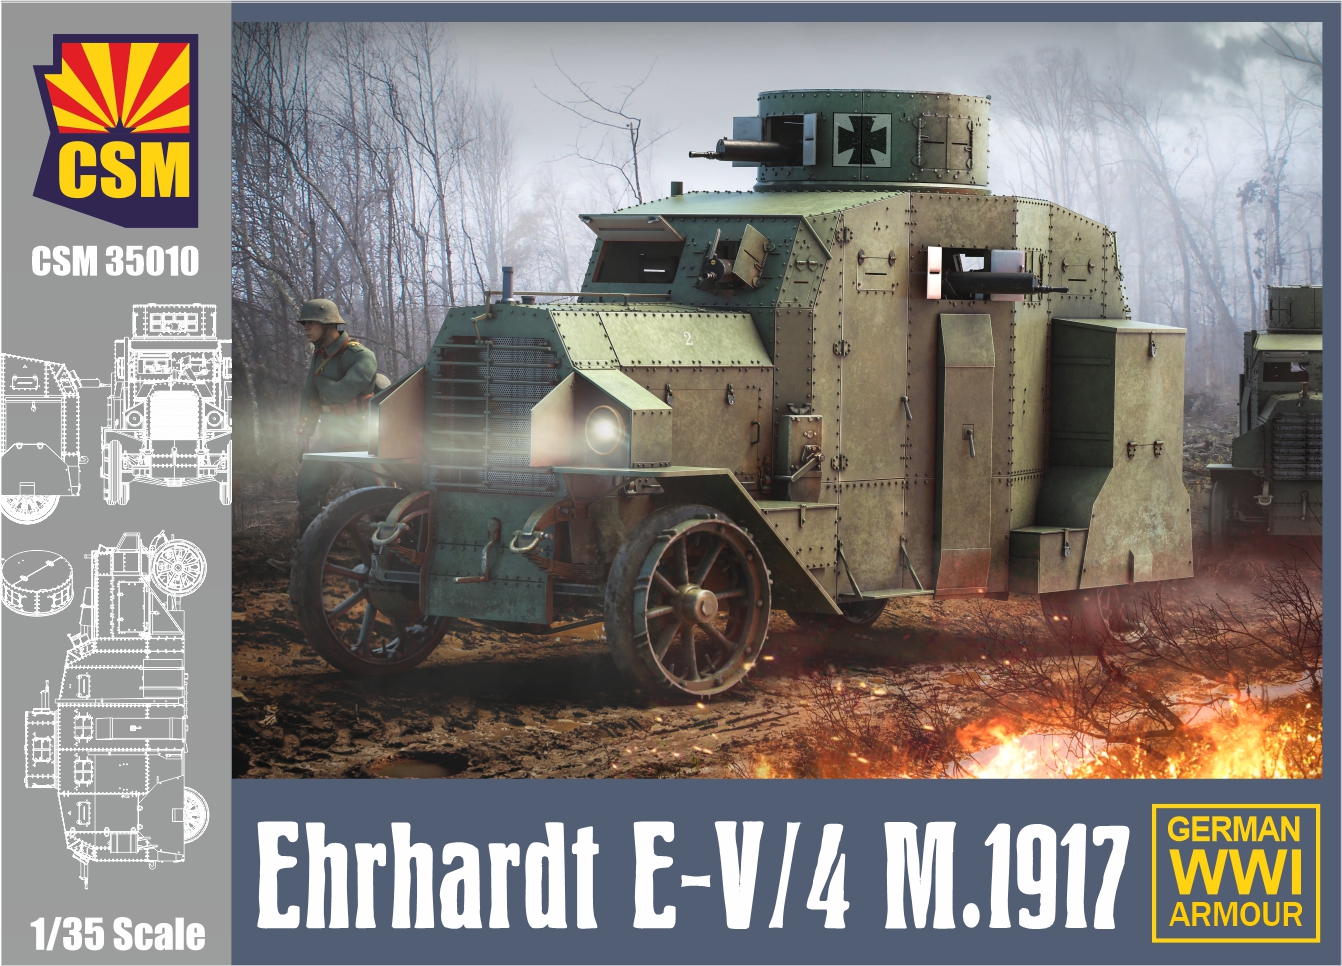 1/35 German Armoured Car Ehrhardt M.1917